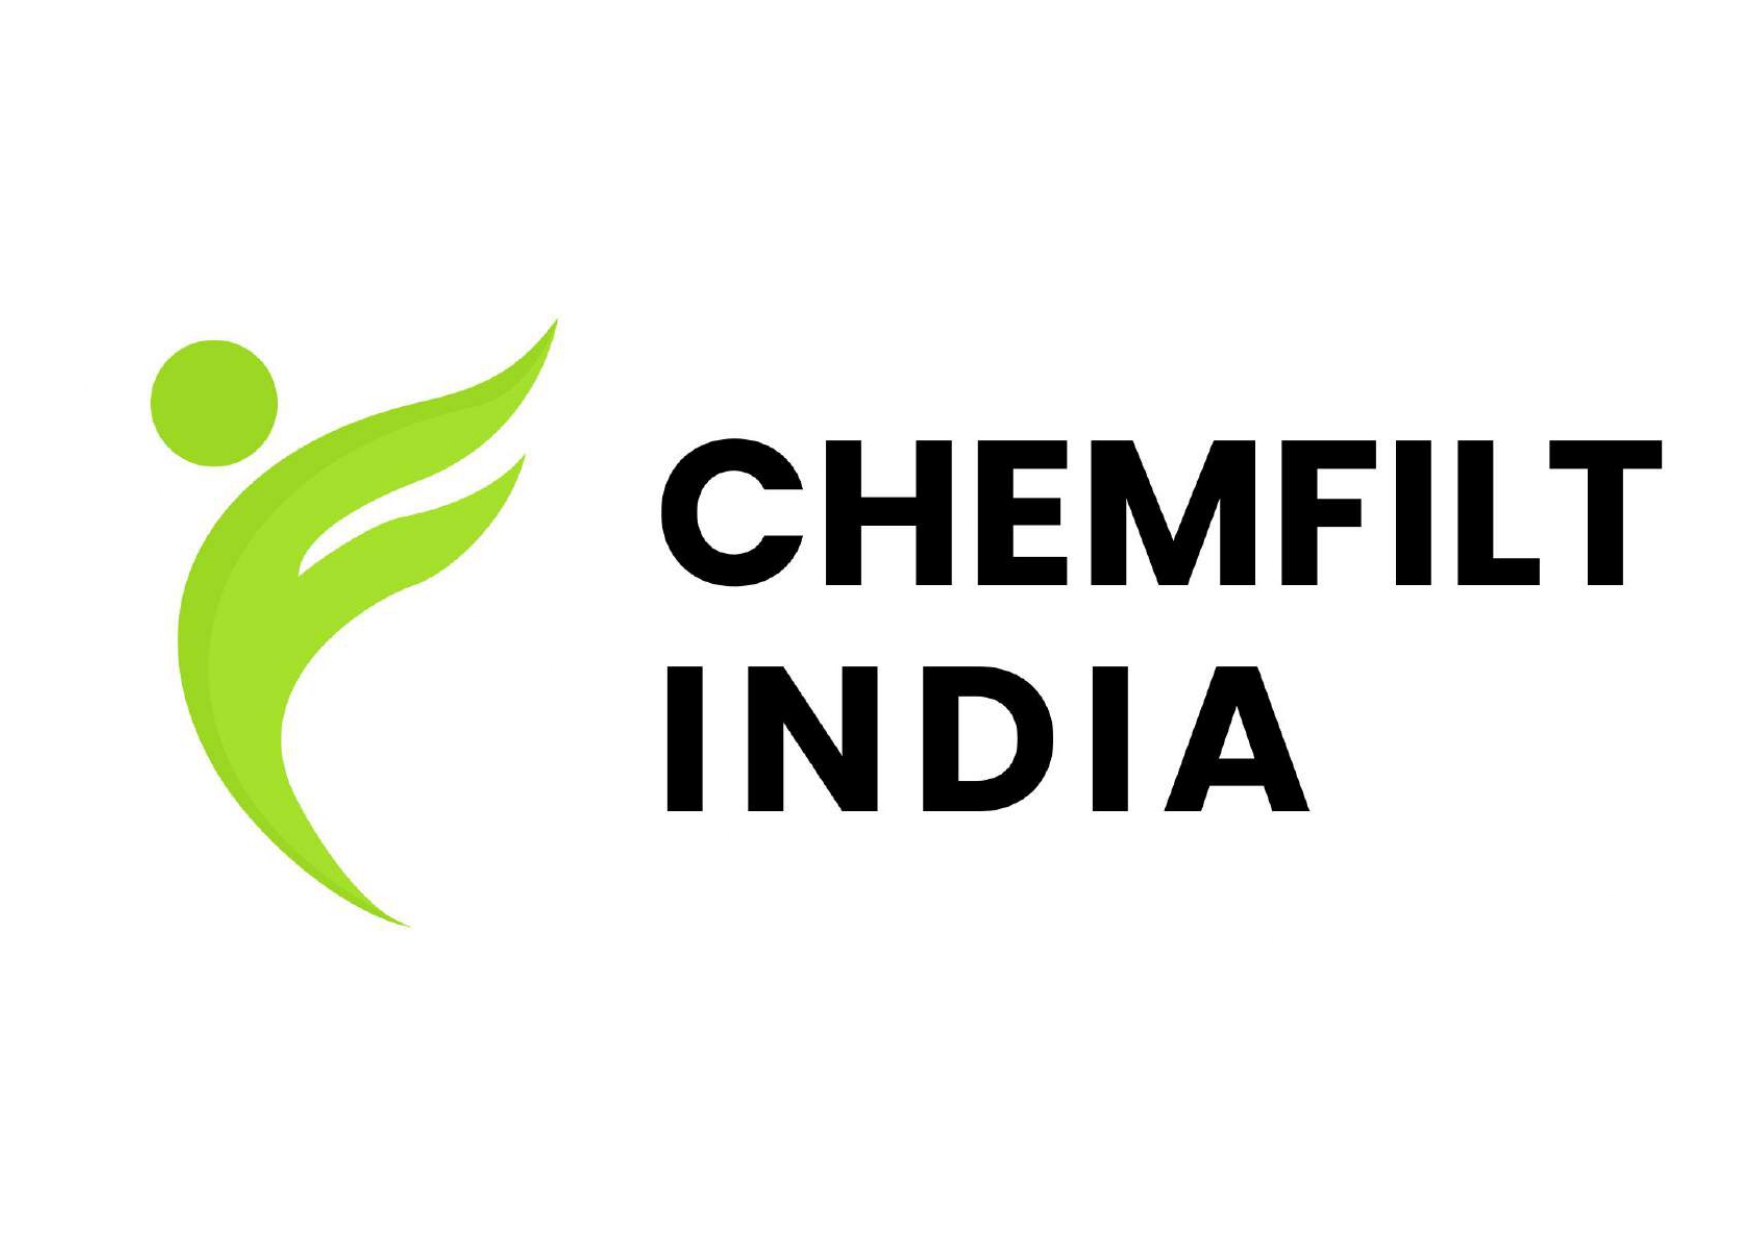 Chemfilt India